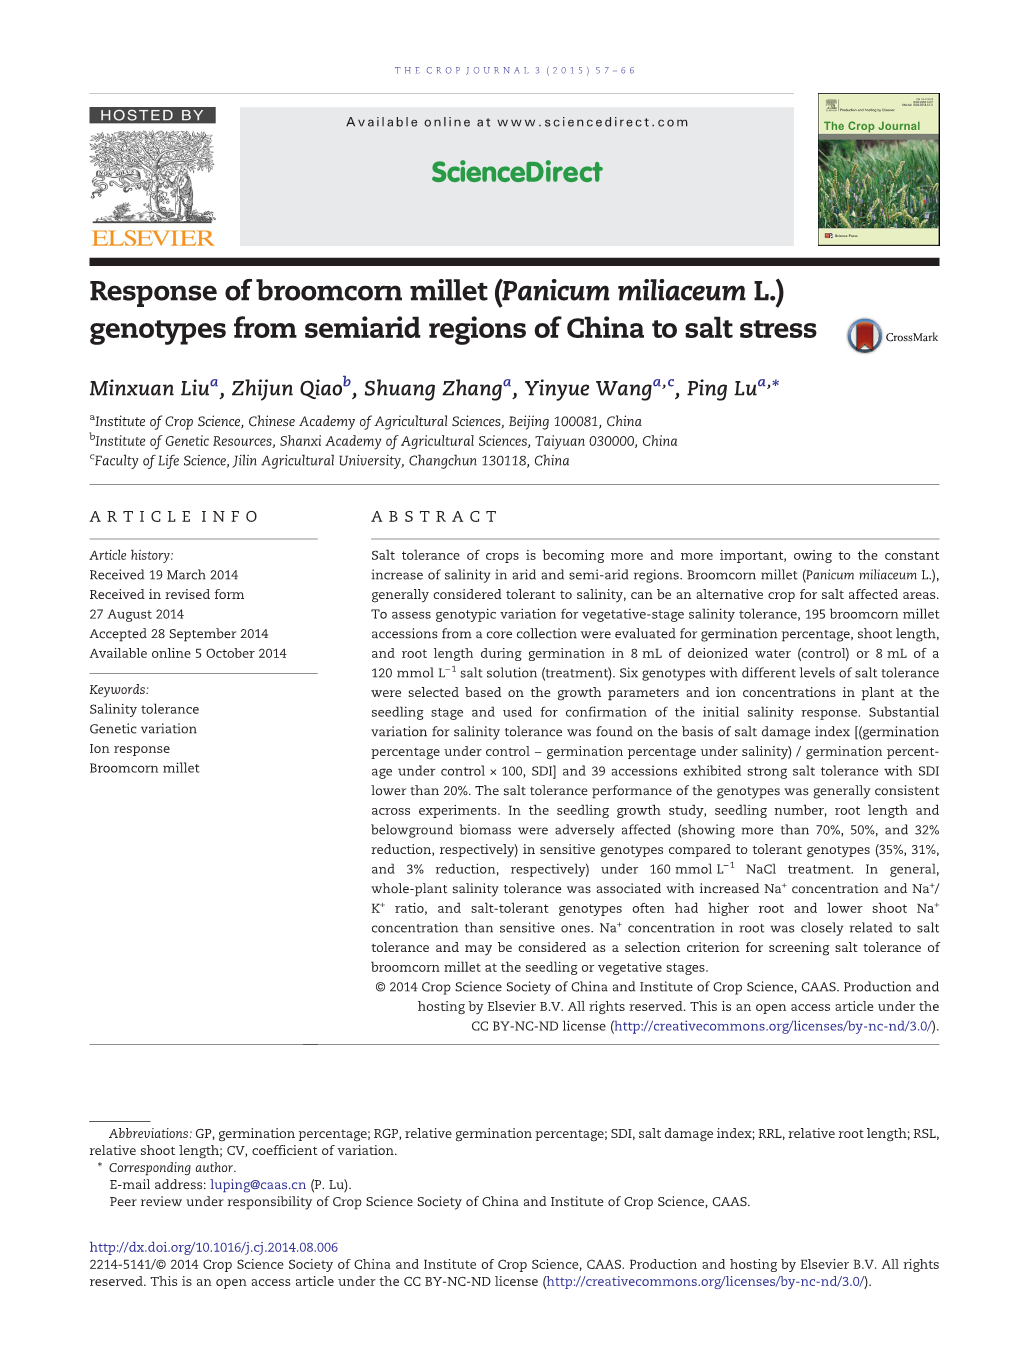 Response of Broomcorn Millet (Panicum Miliaceum L.) Genotypes from Semiarid Regions of China to Salt Stress